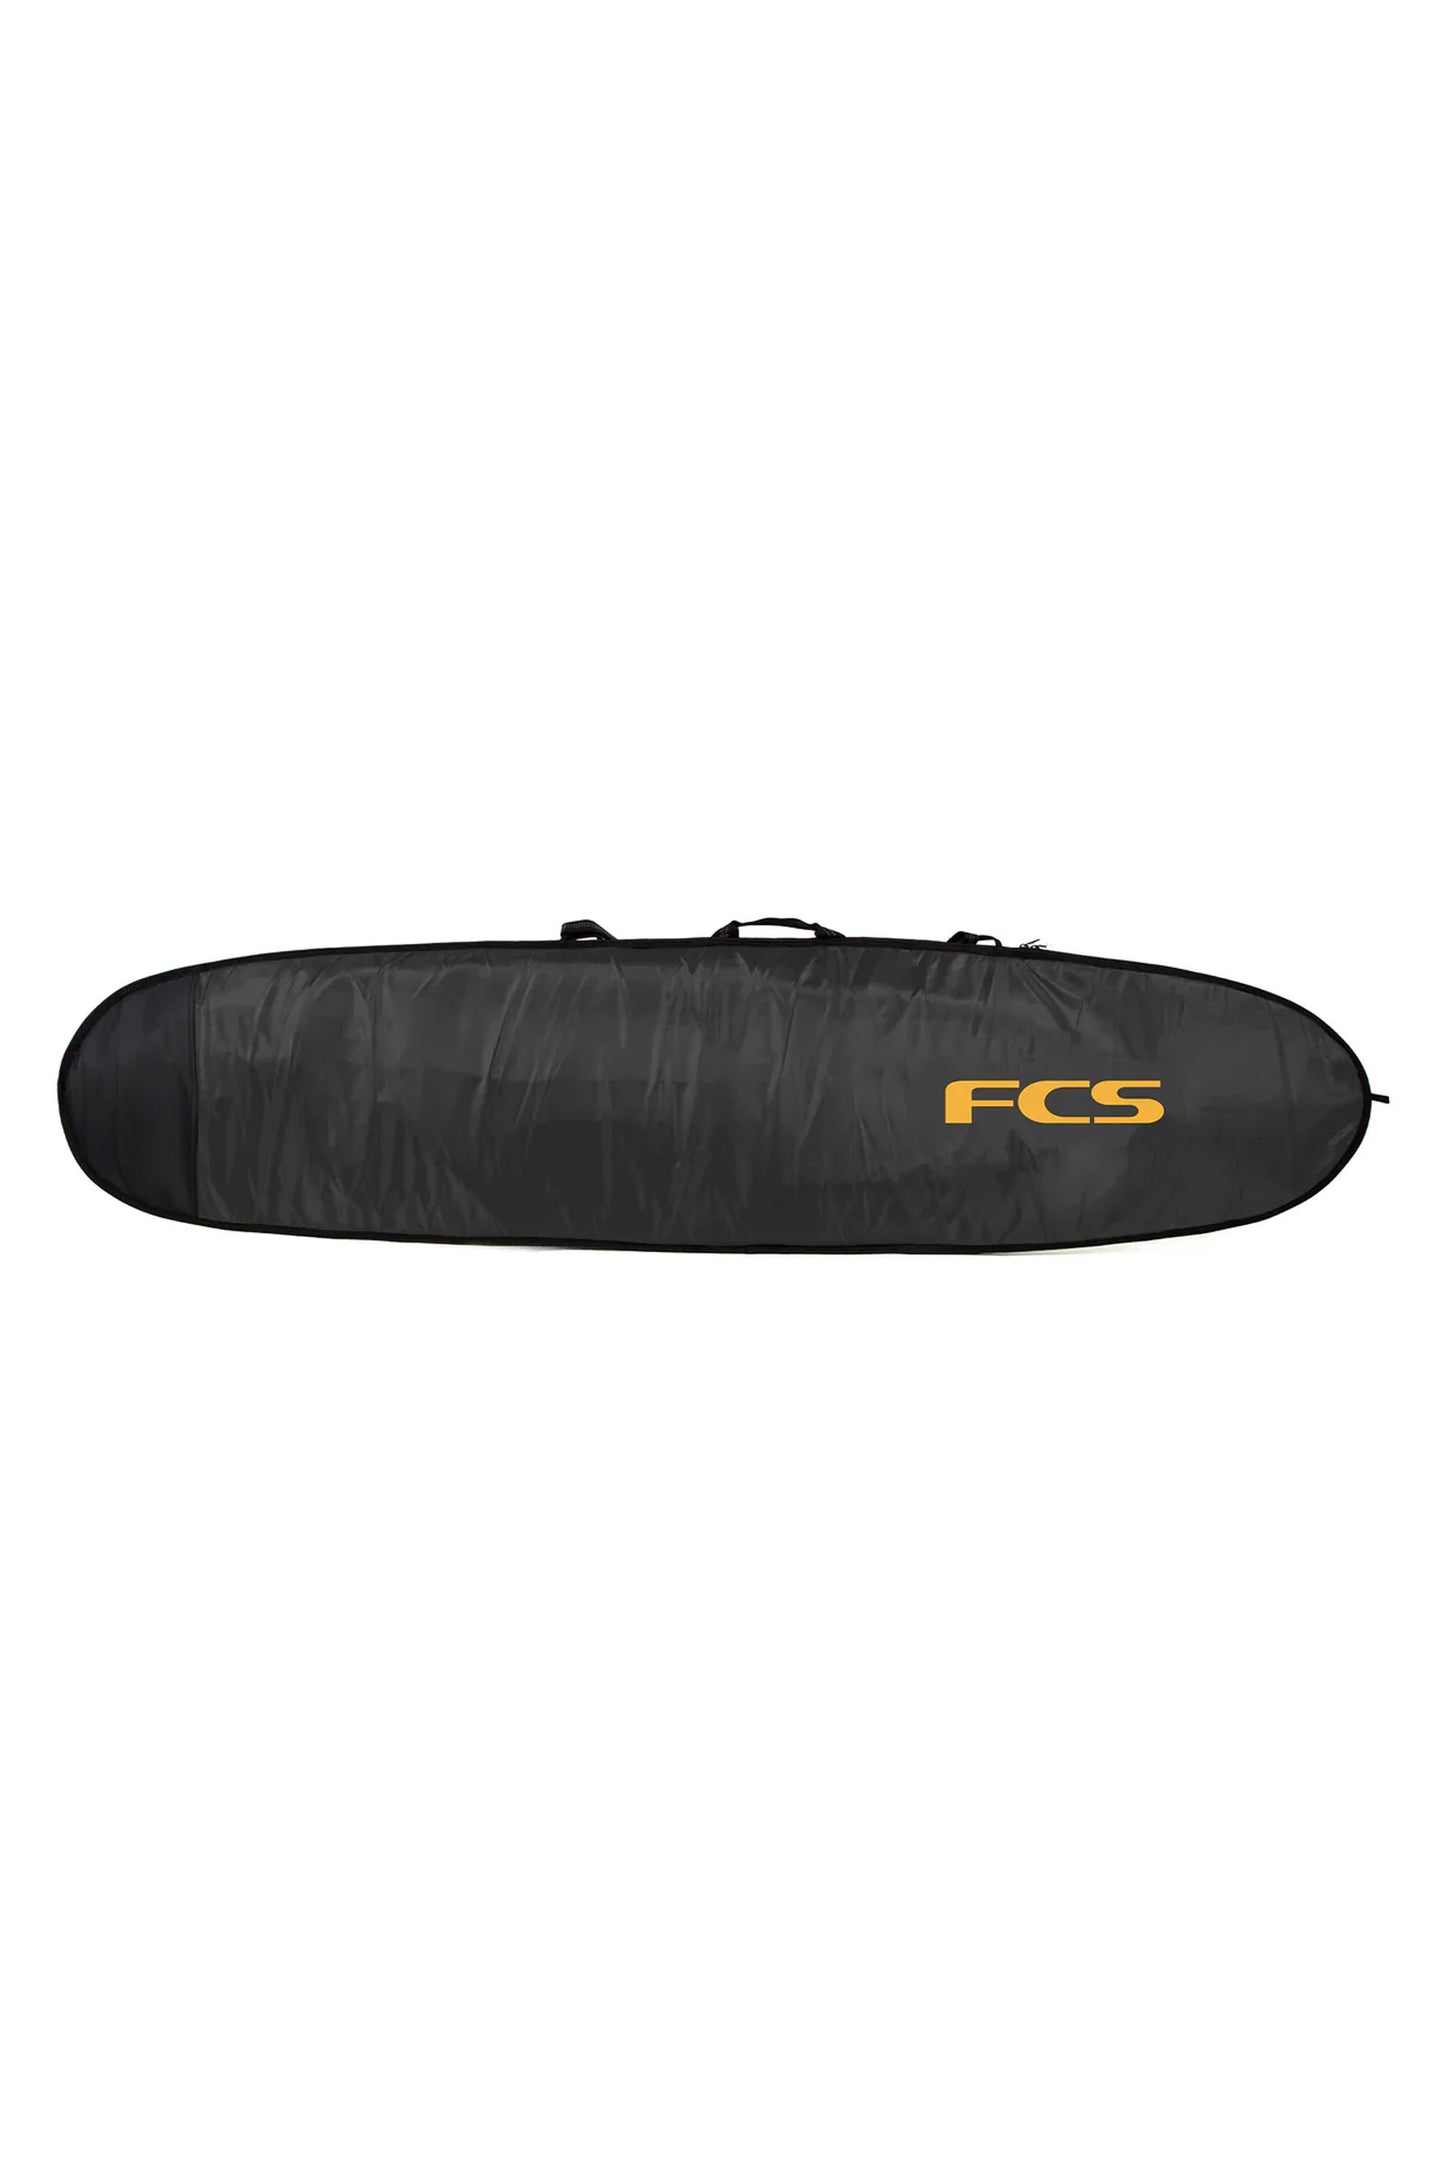 Pukas-Surf-Shop-fcs-classic-longboard-cover-black-mango